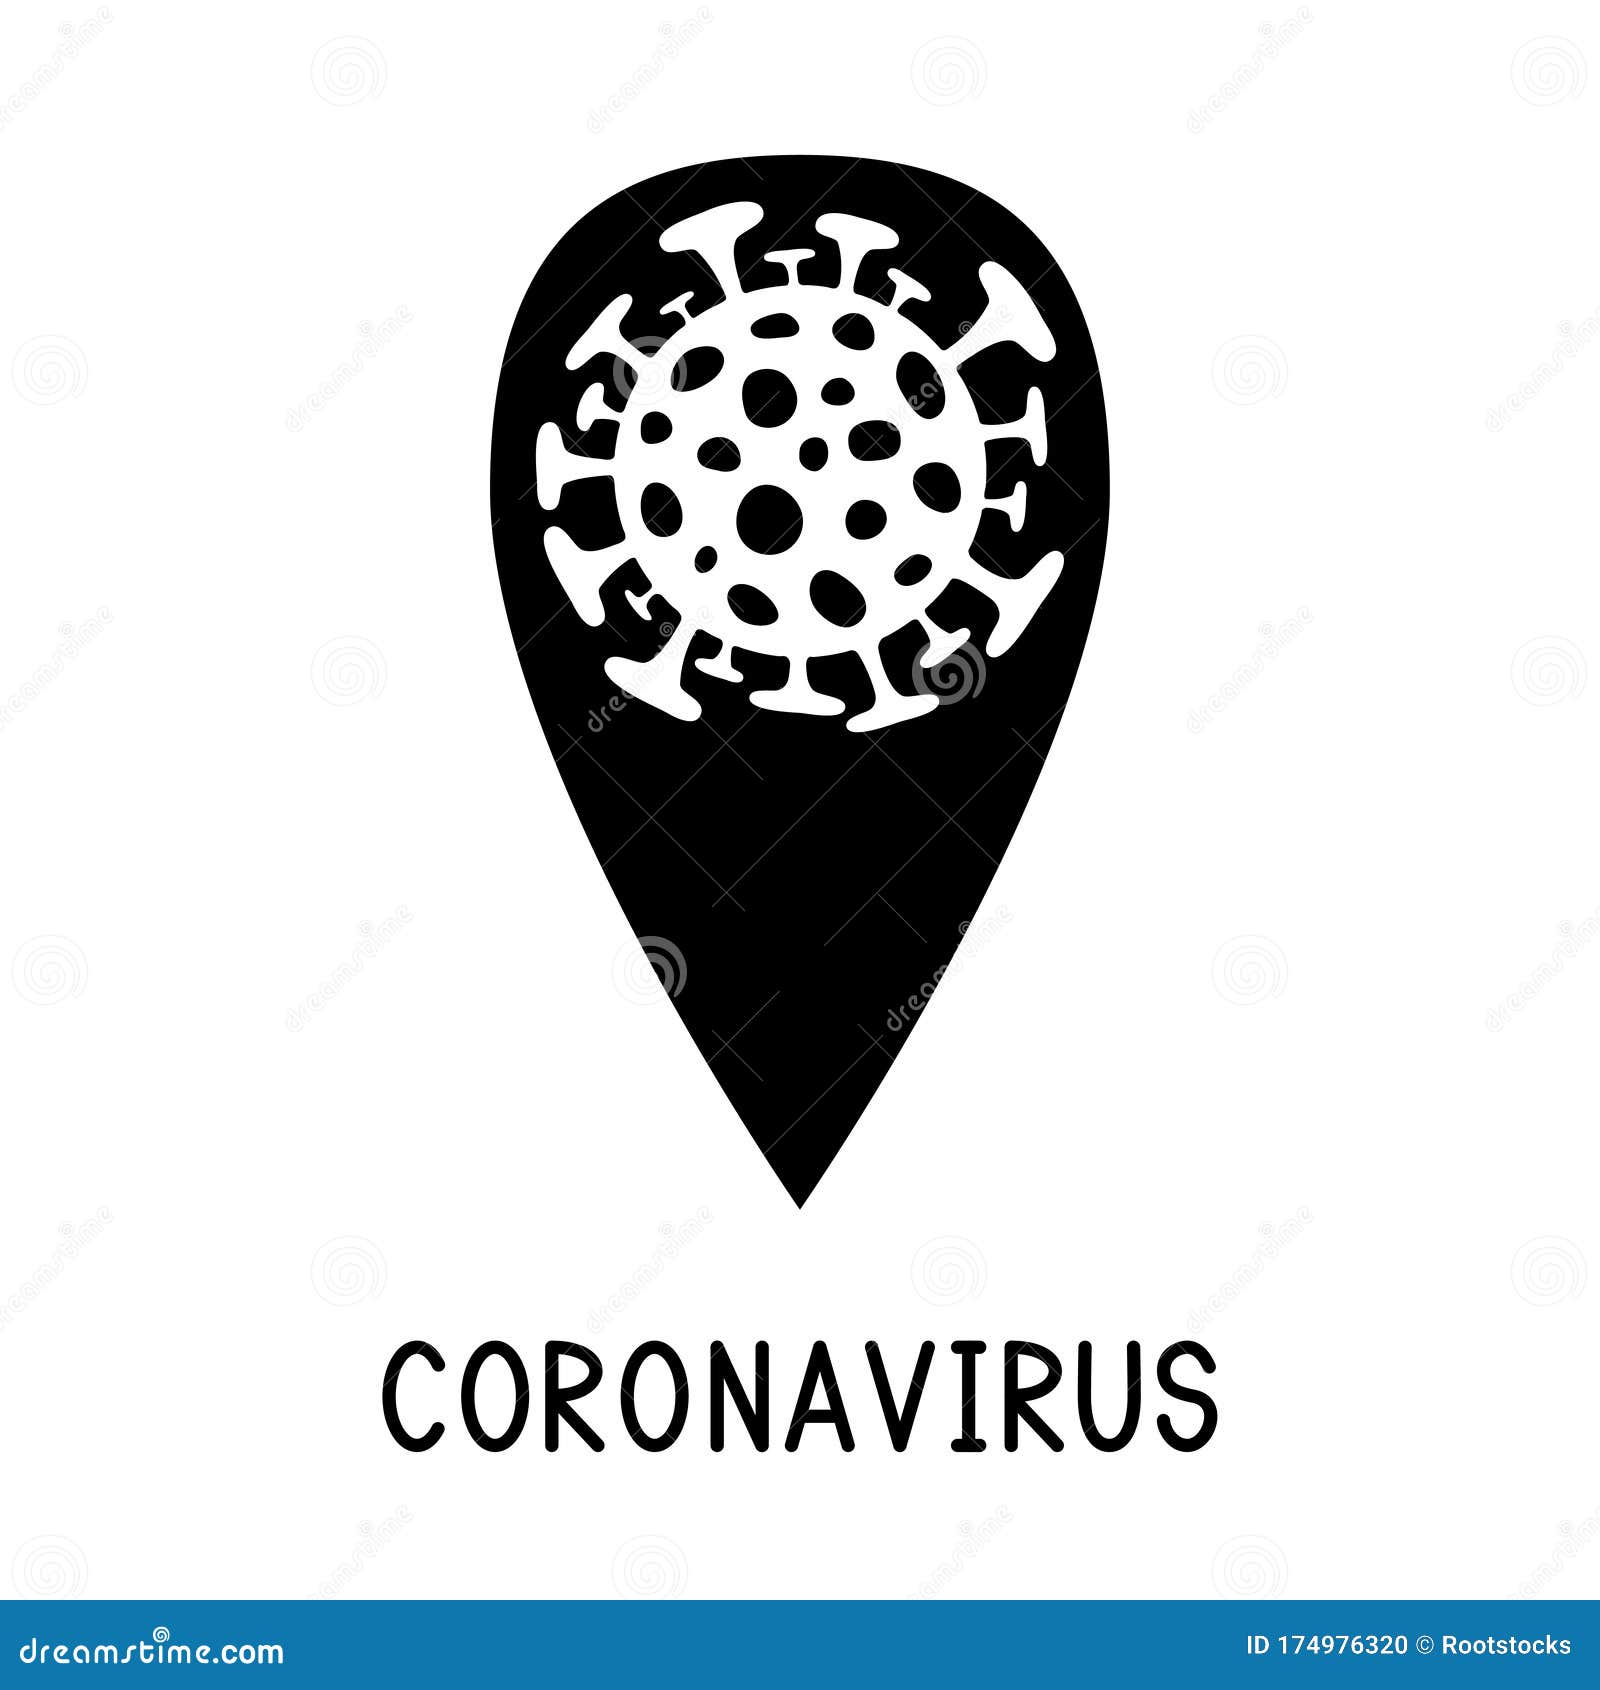 coronavirus decease location